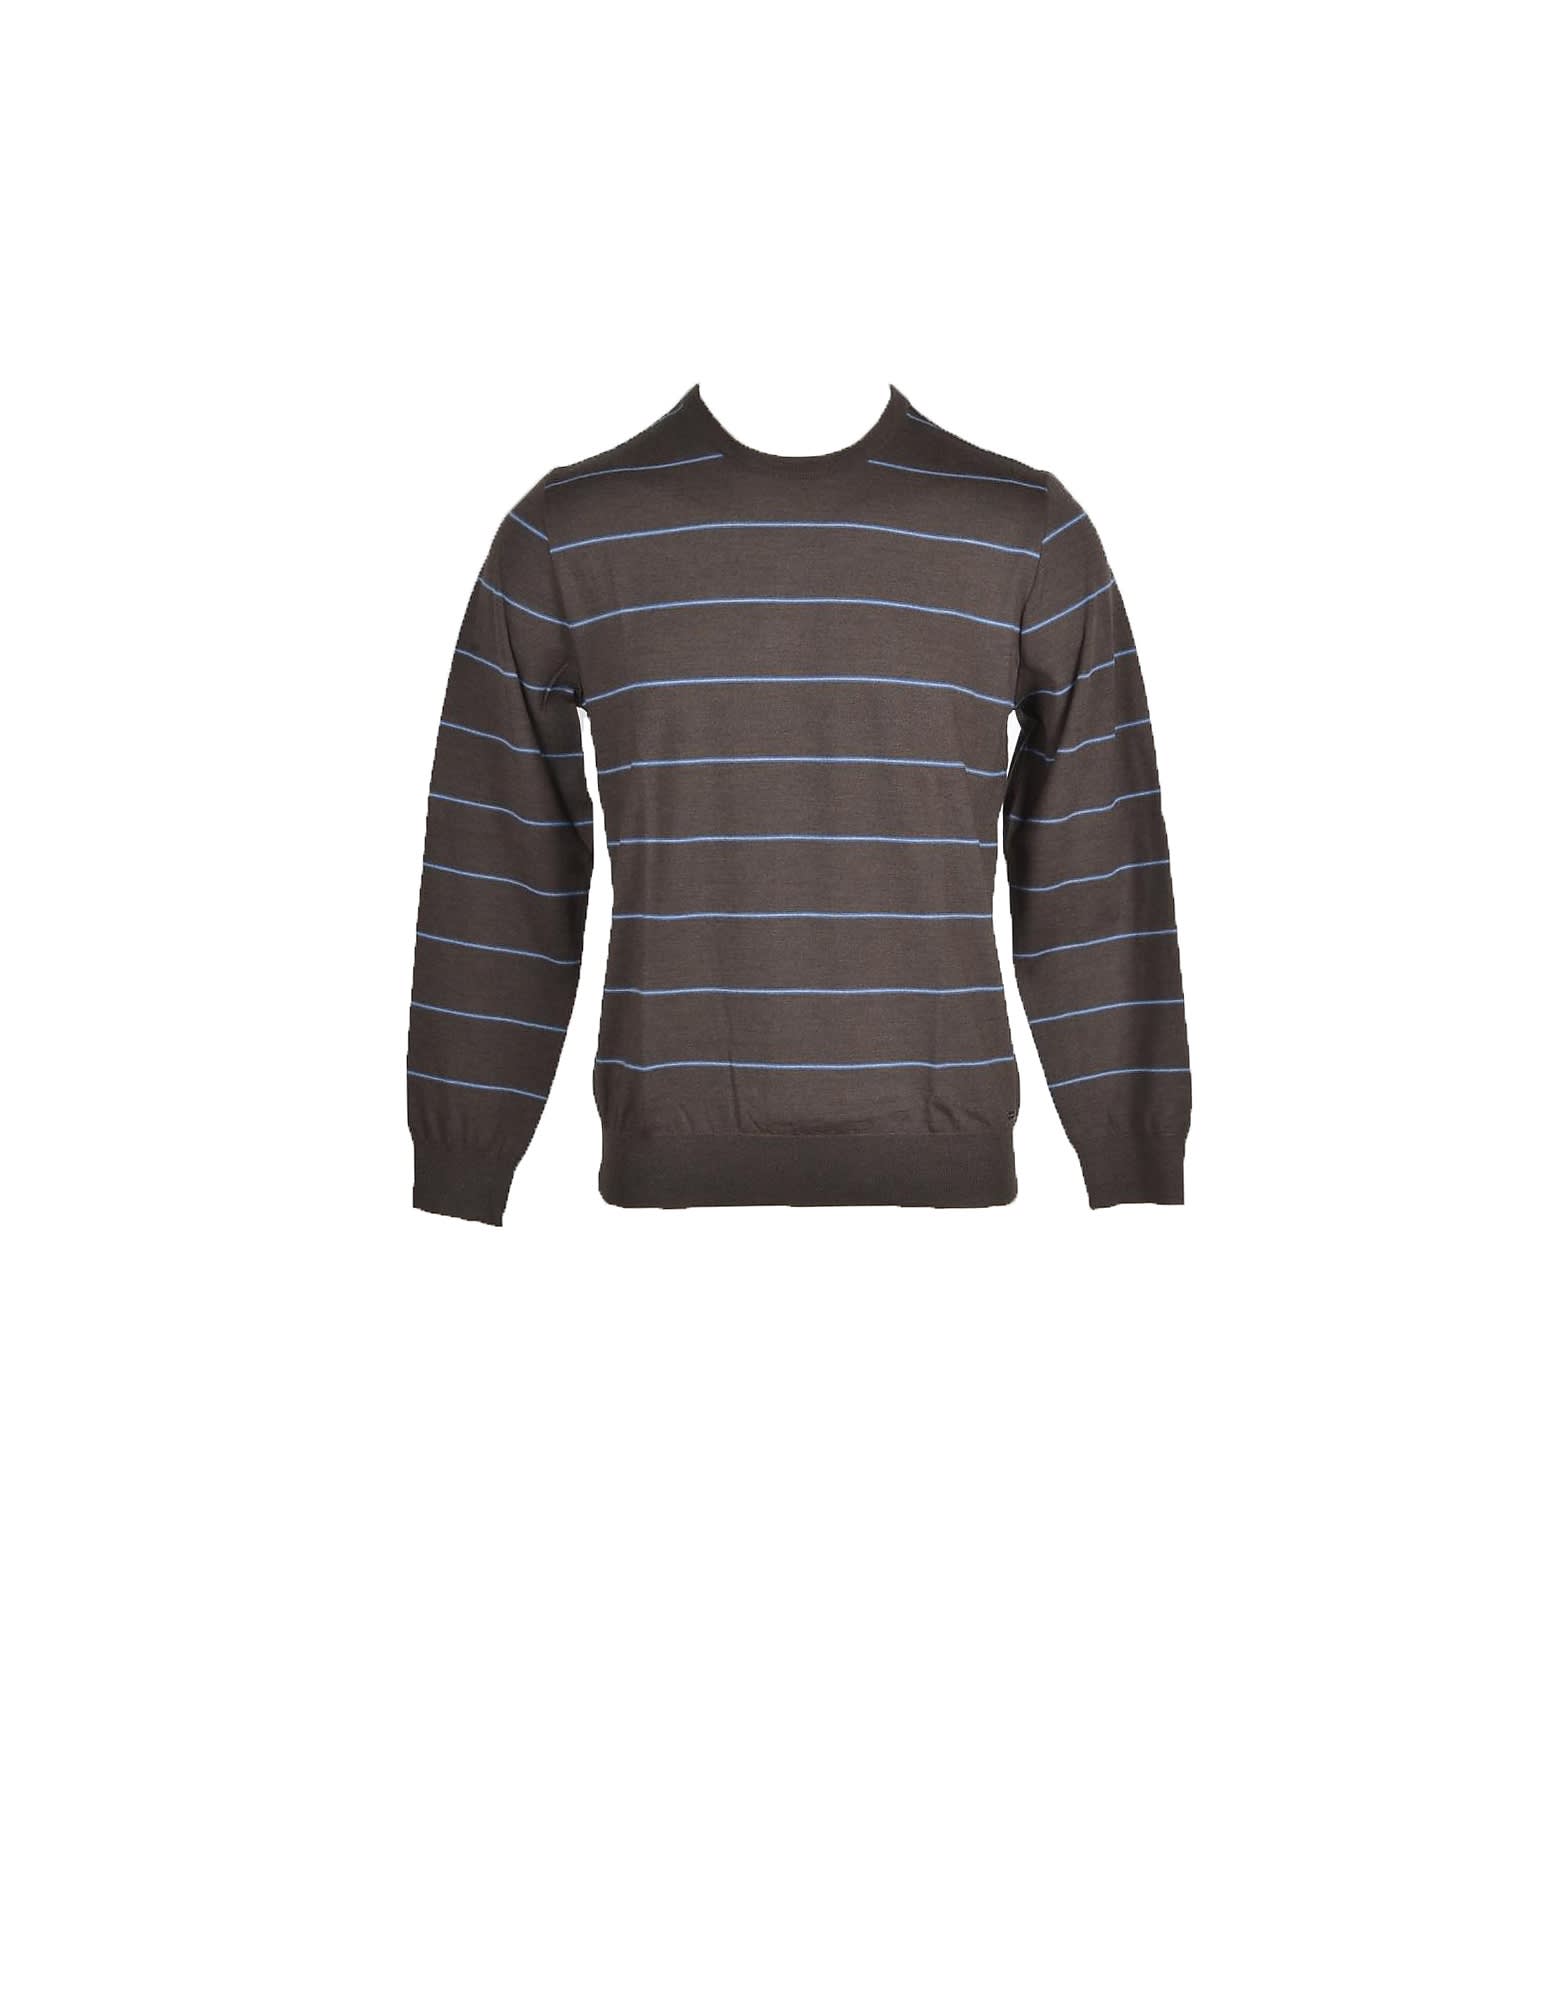 Paul & shark Mens Brown Sweater